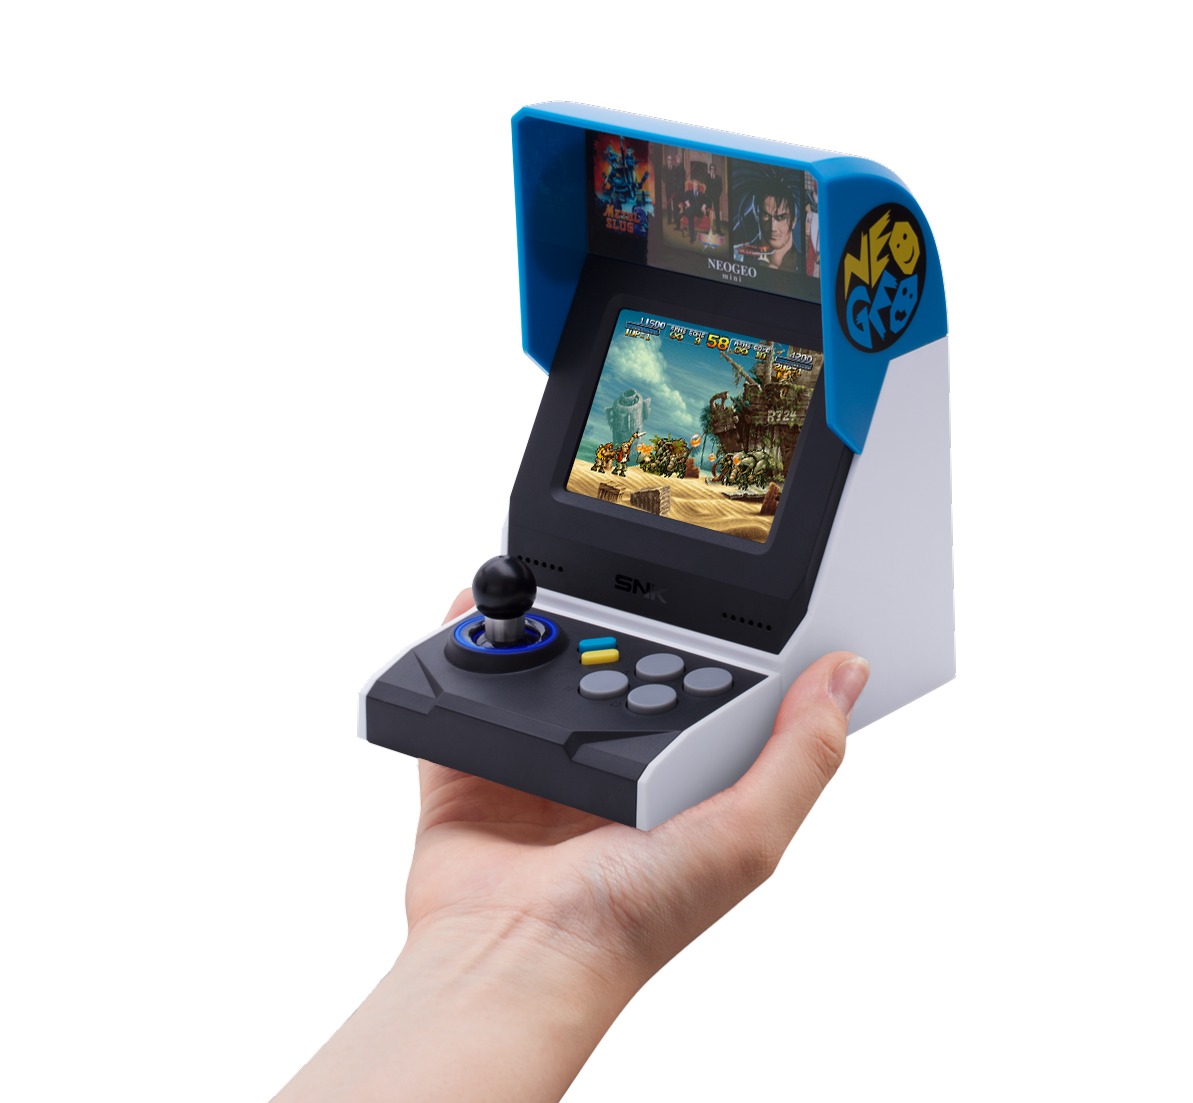 SNK Neo Geo Mini HD International Console + Free Neo Geo Mini Keychain